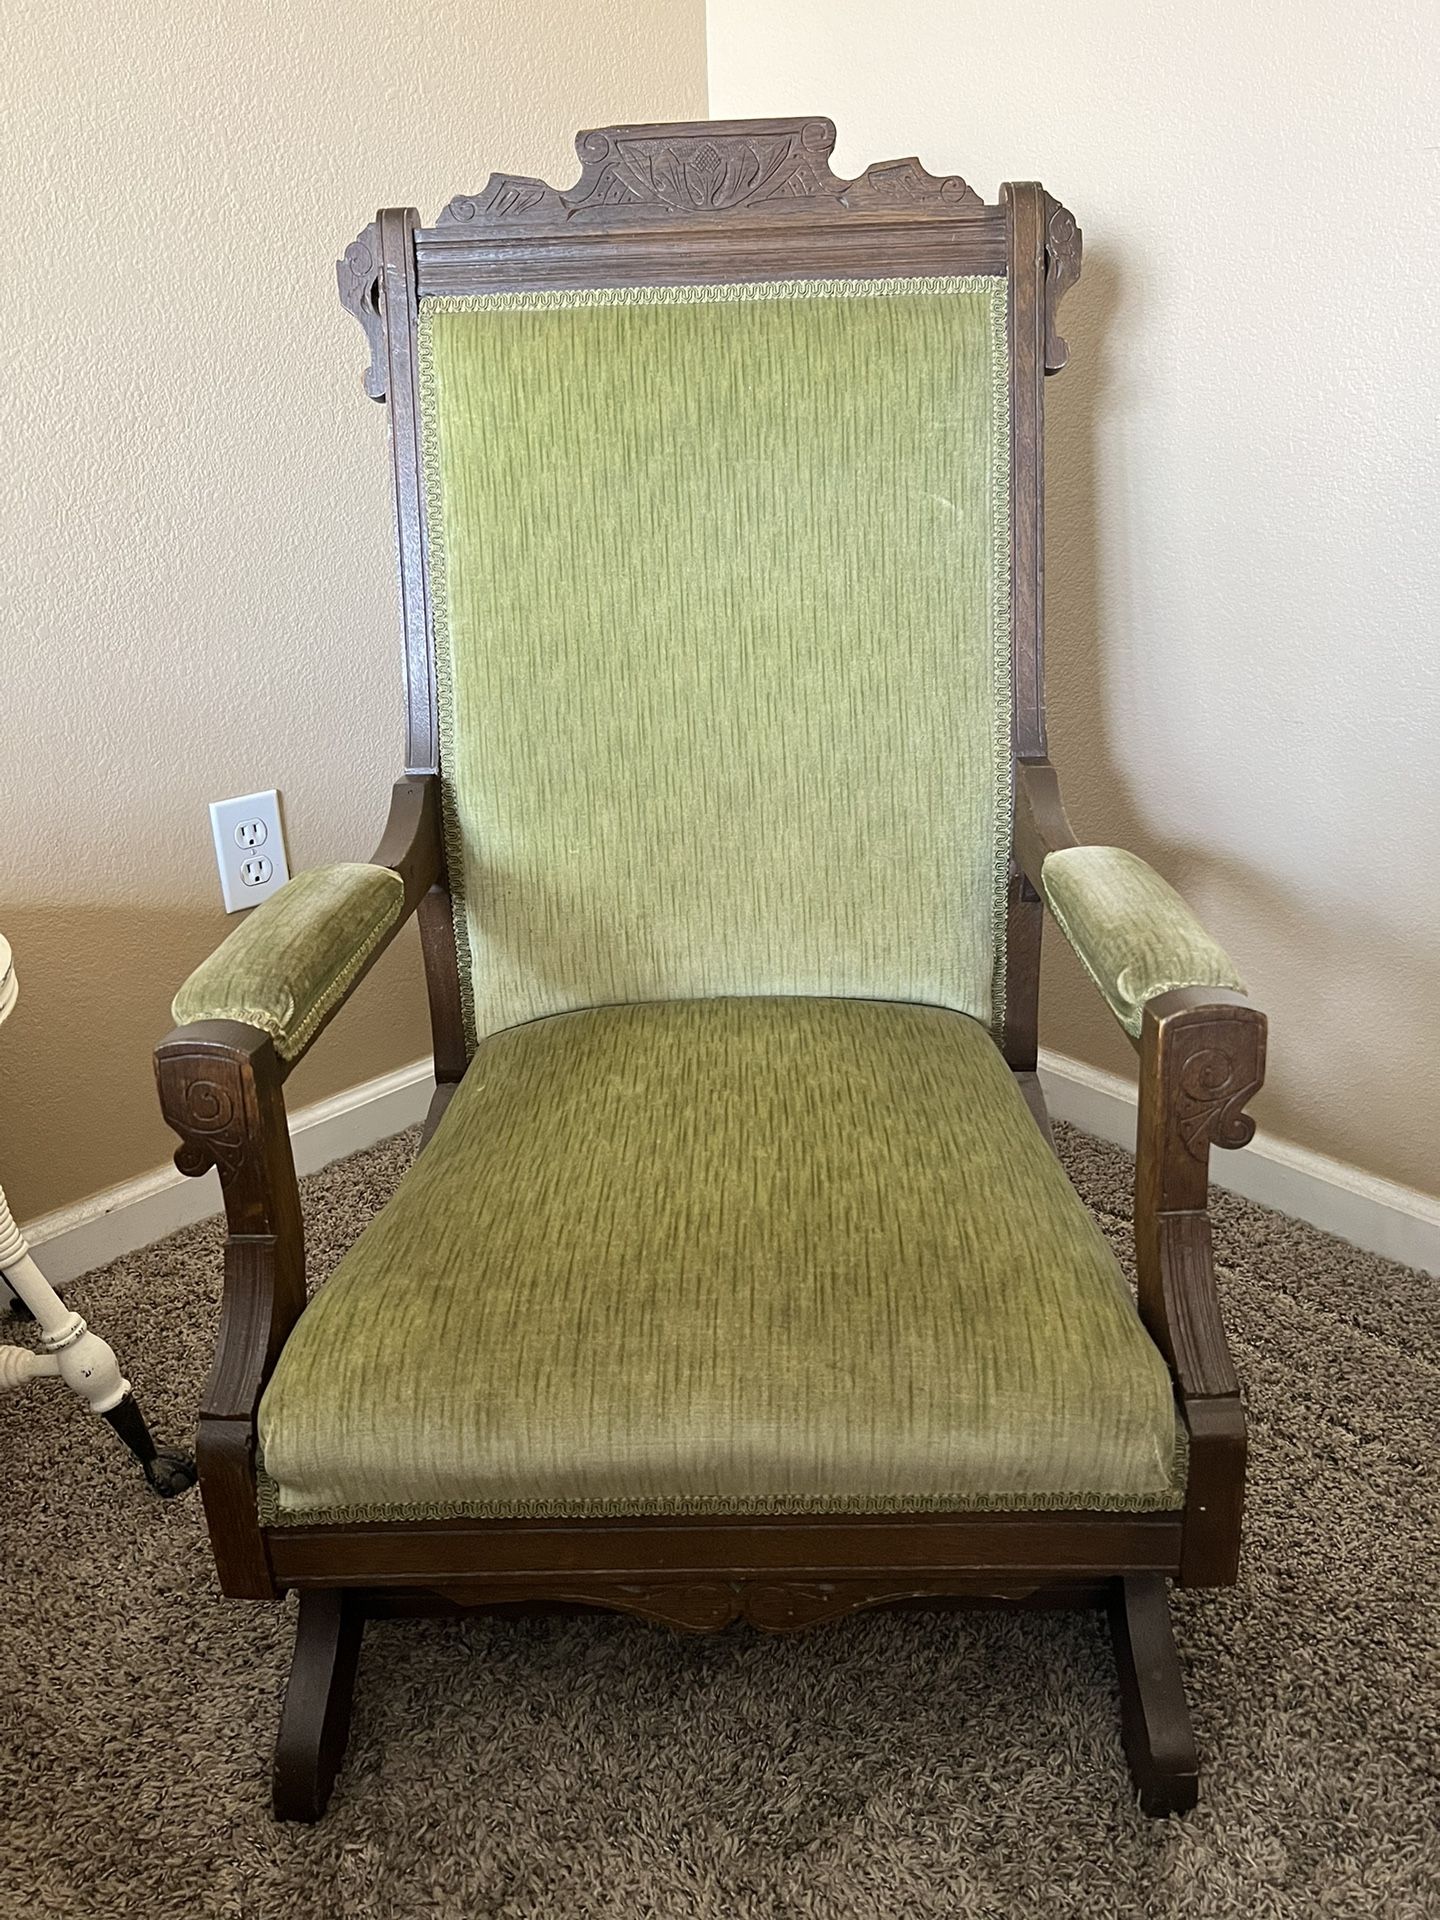 Antique Green Rocking Chair